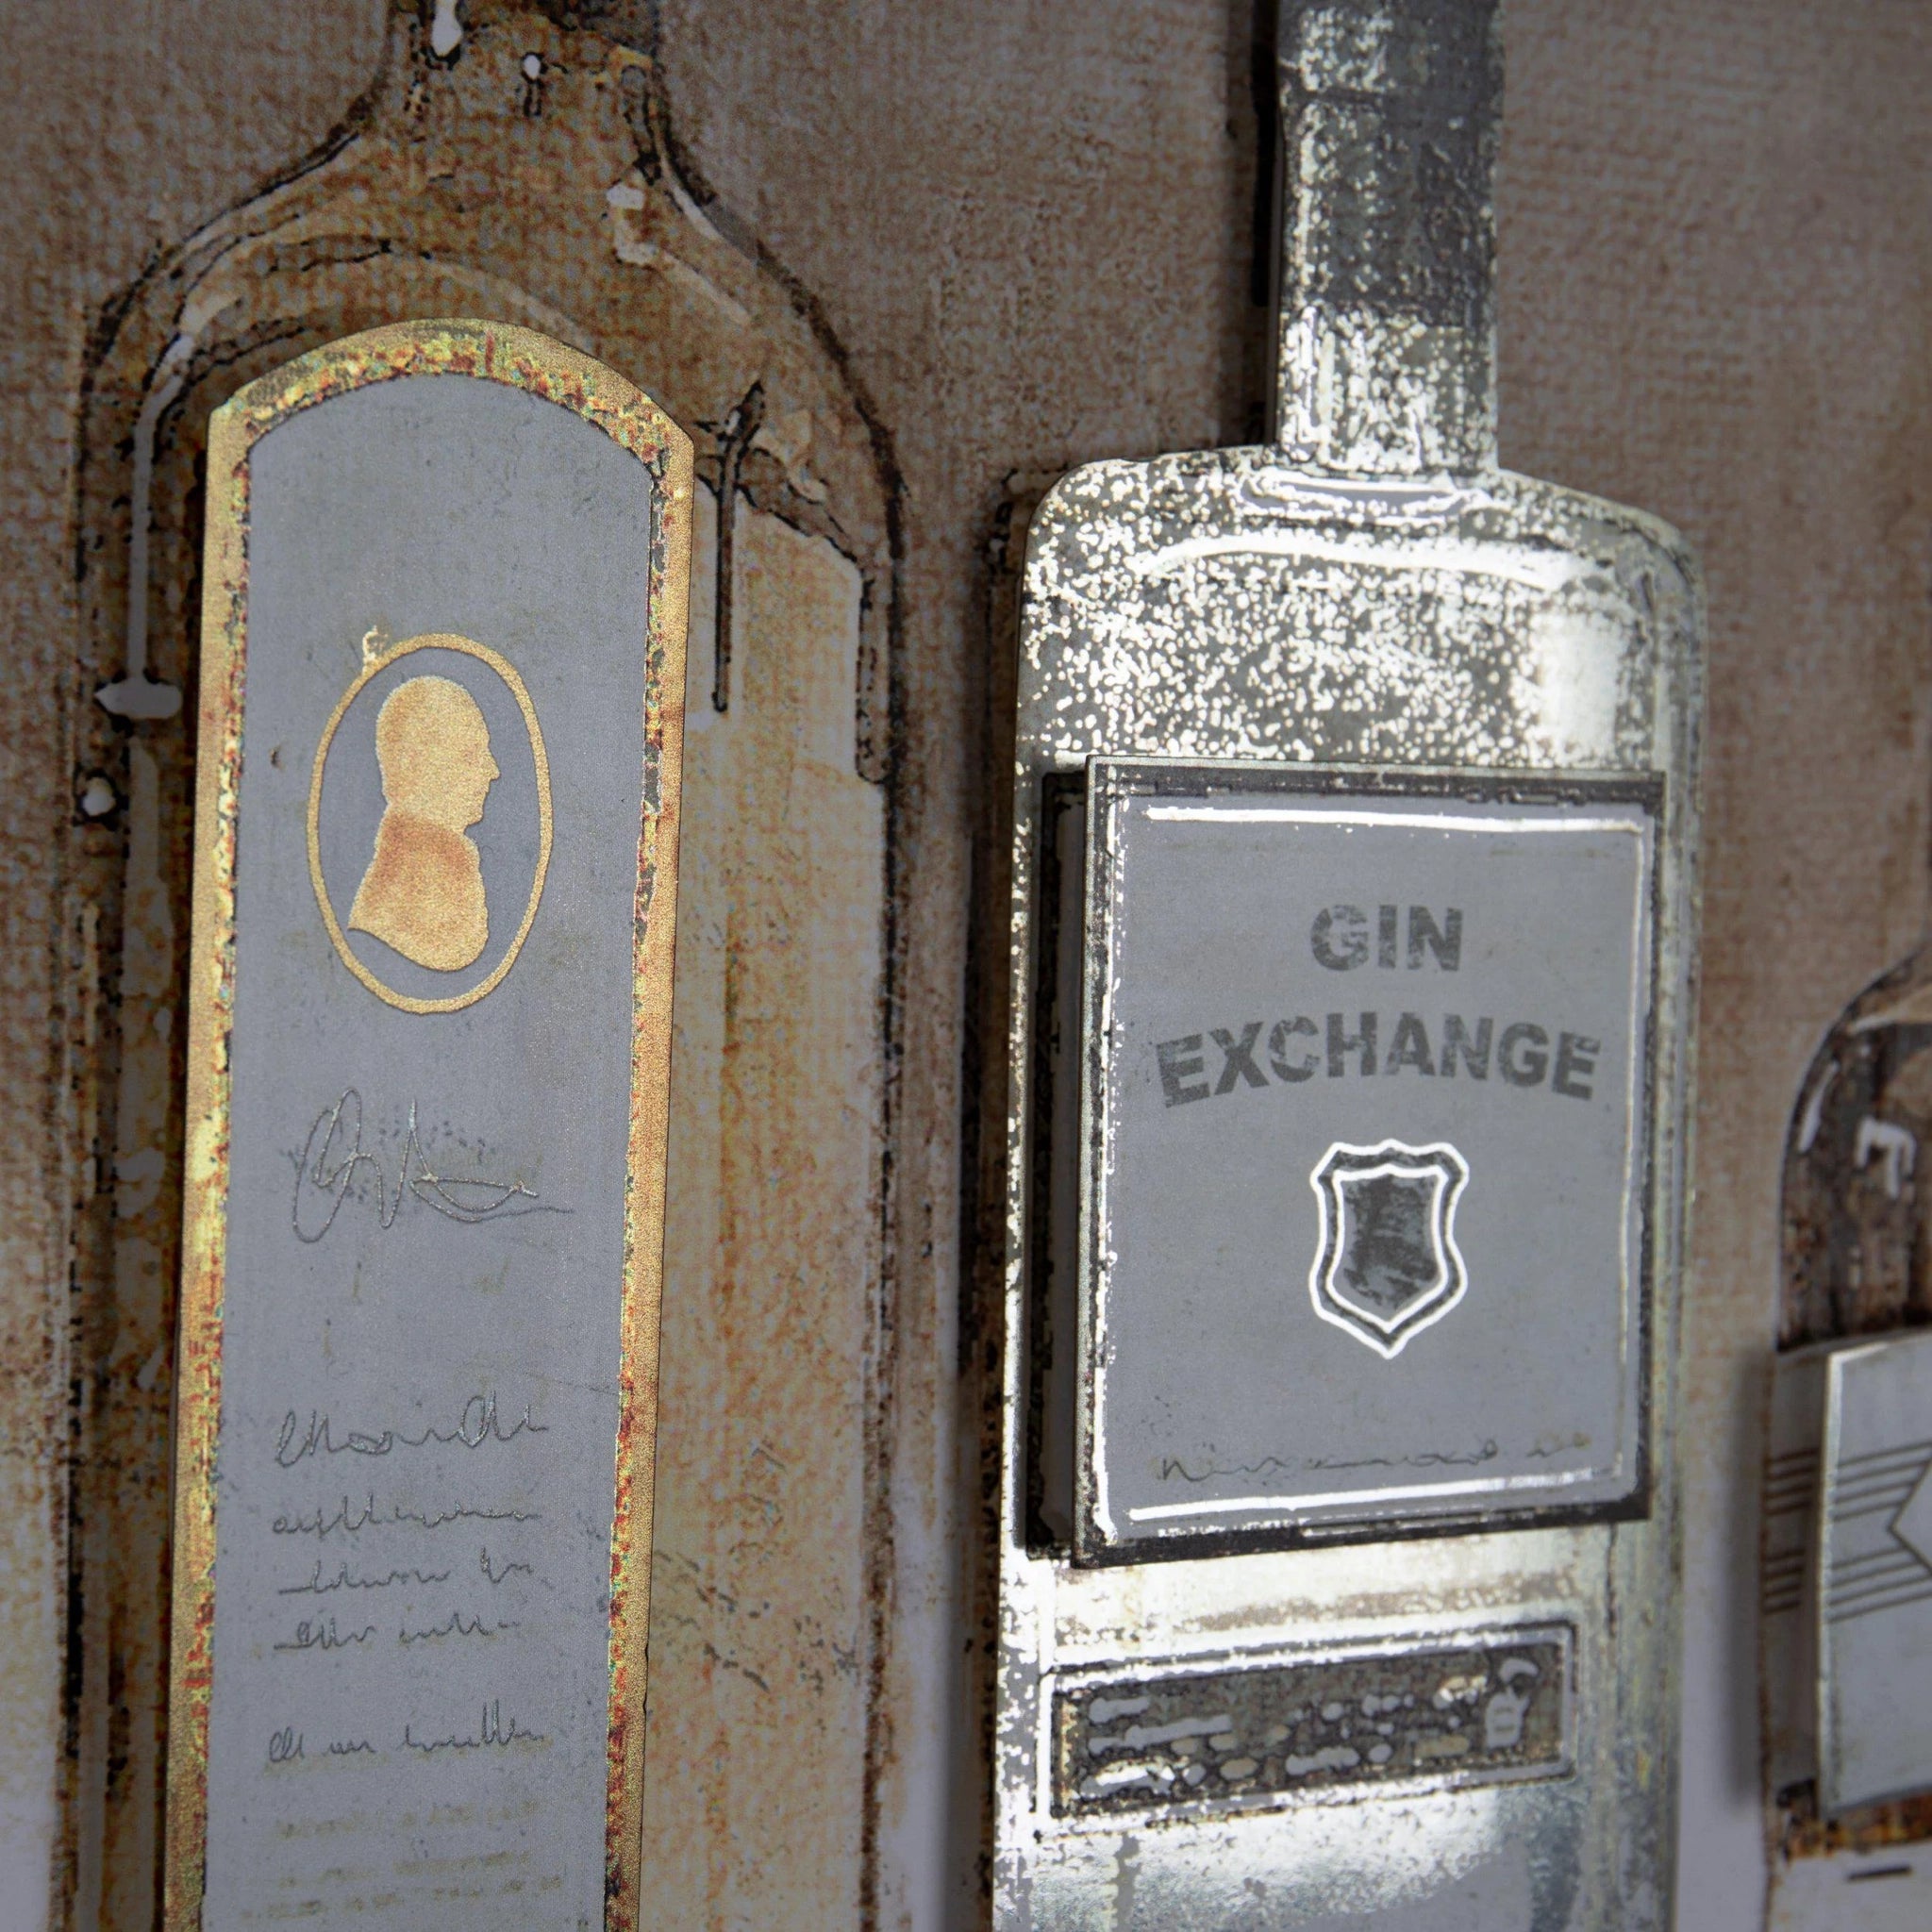 Close-up detail of vintage liquor bottles with raised metallic paper labels.